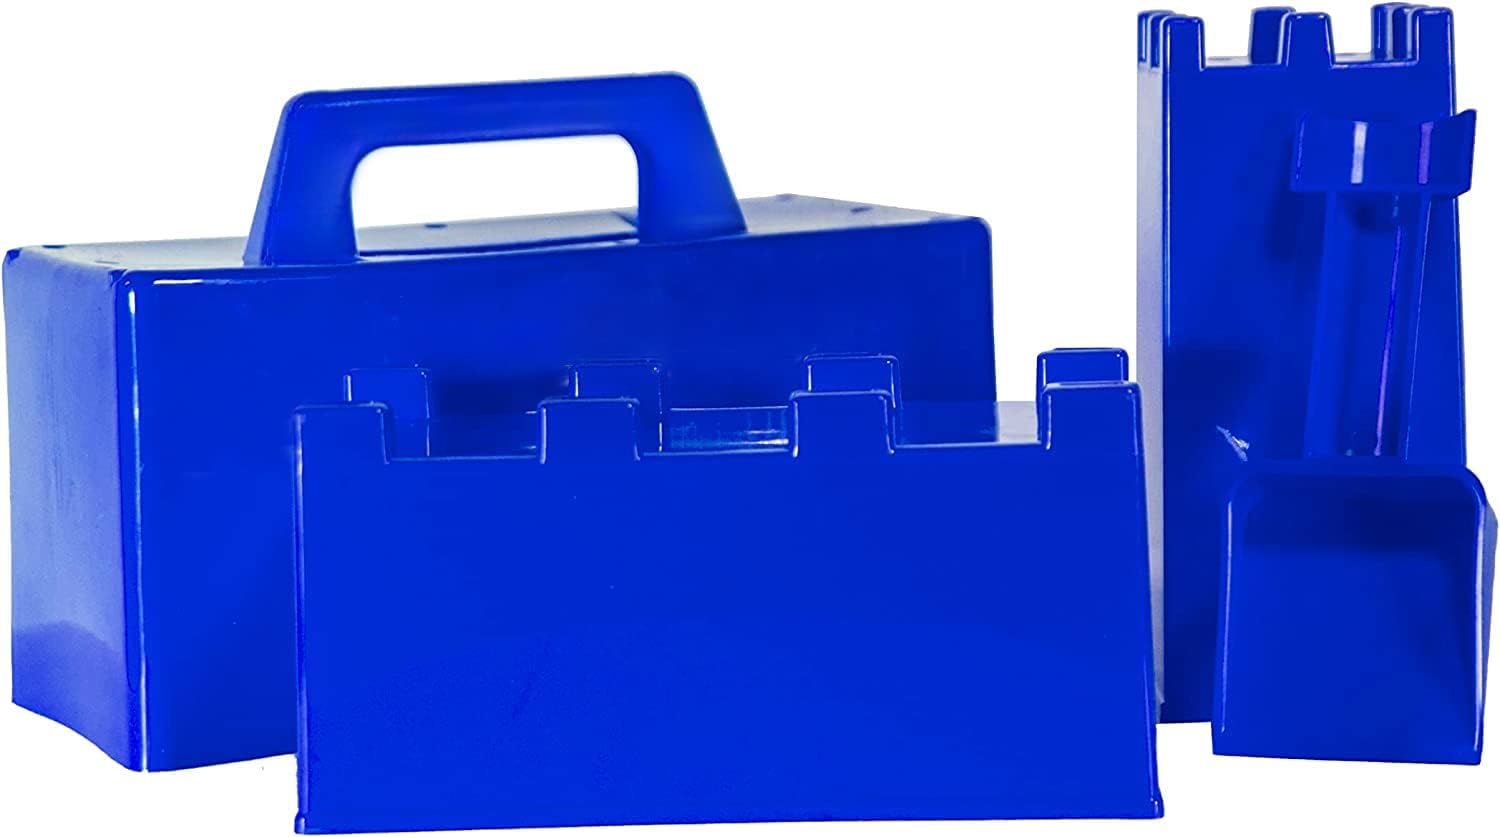 Snow Fort Building Kit | 4-Piece Set, Red or Blue